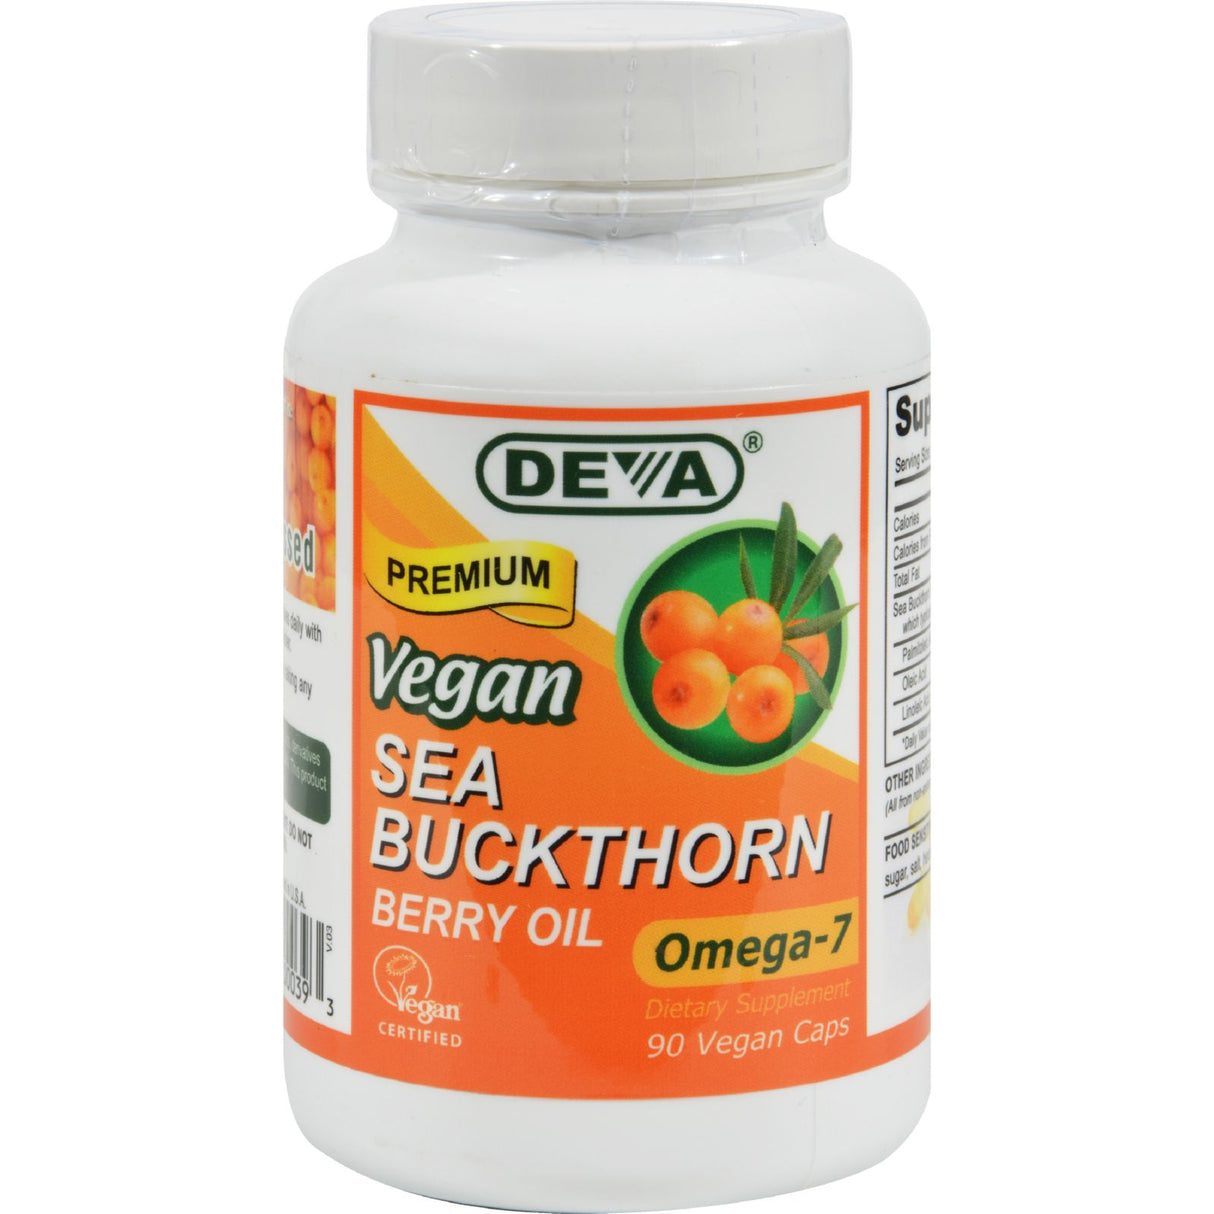 Deva Veg Omega-3 DHA - Vegan Omega-3 EPA & DHA ( 90) Vegan Softgels - Cozy Farm 